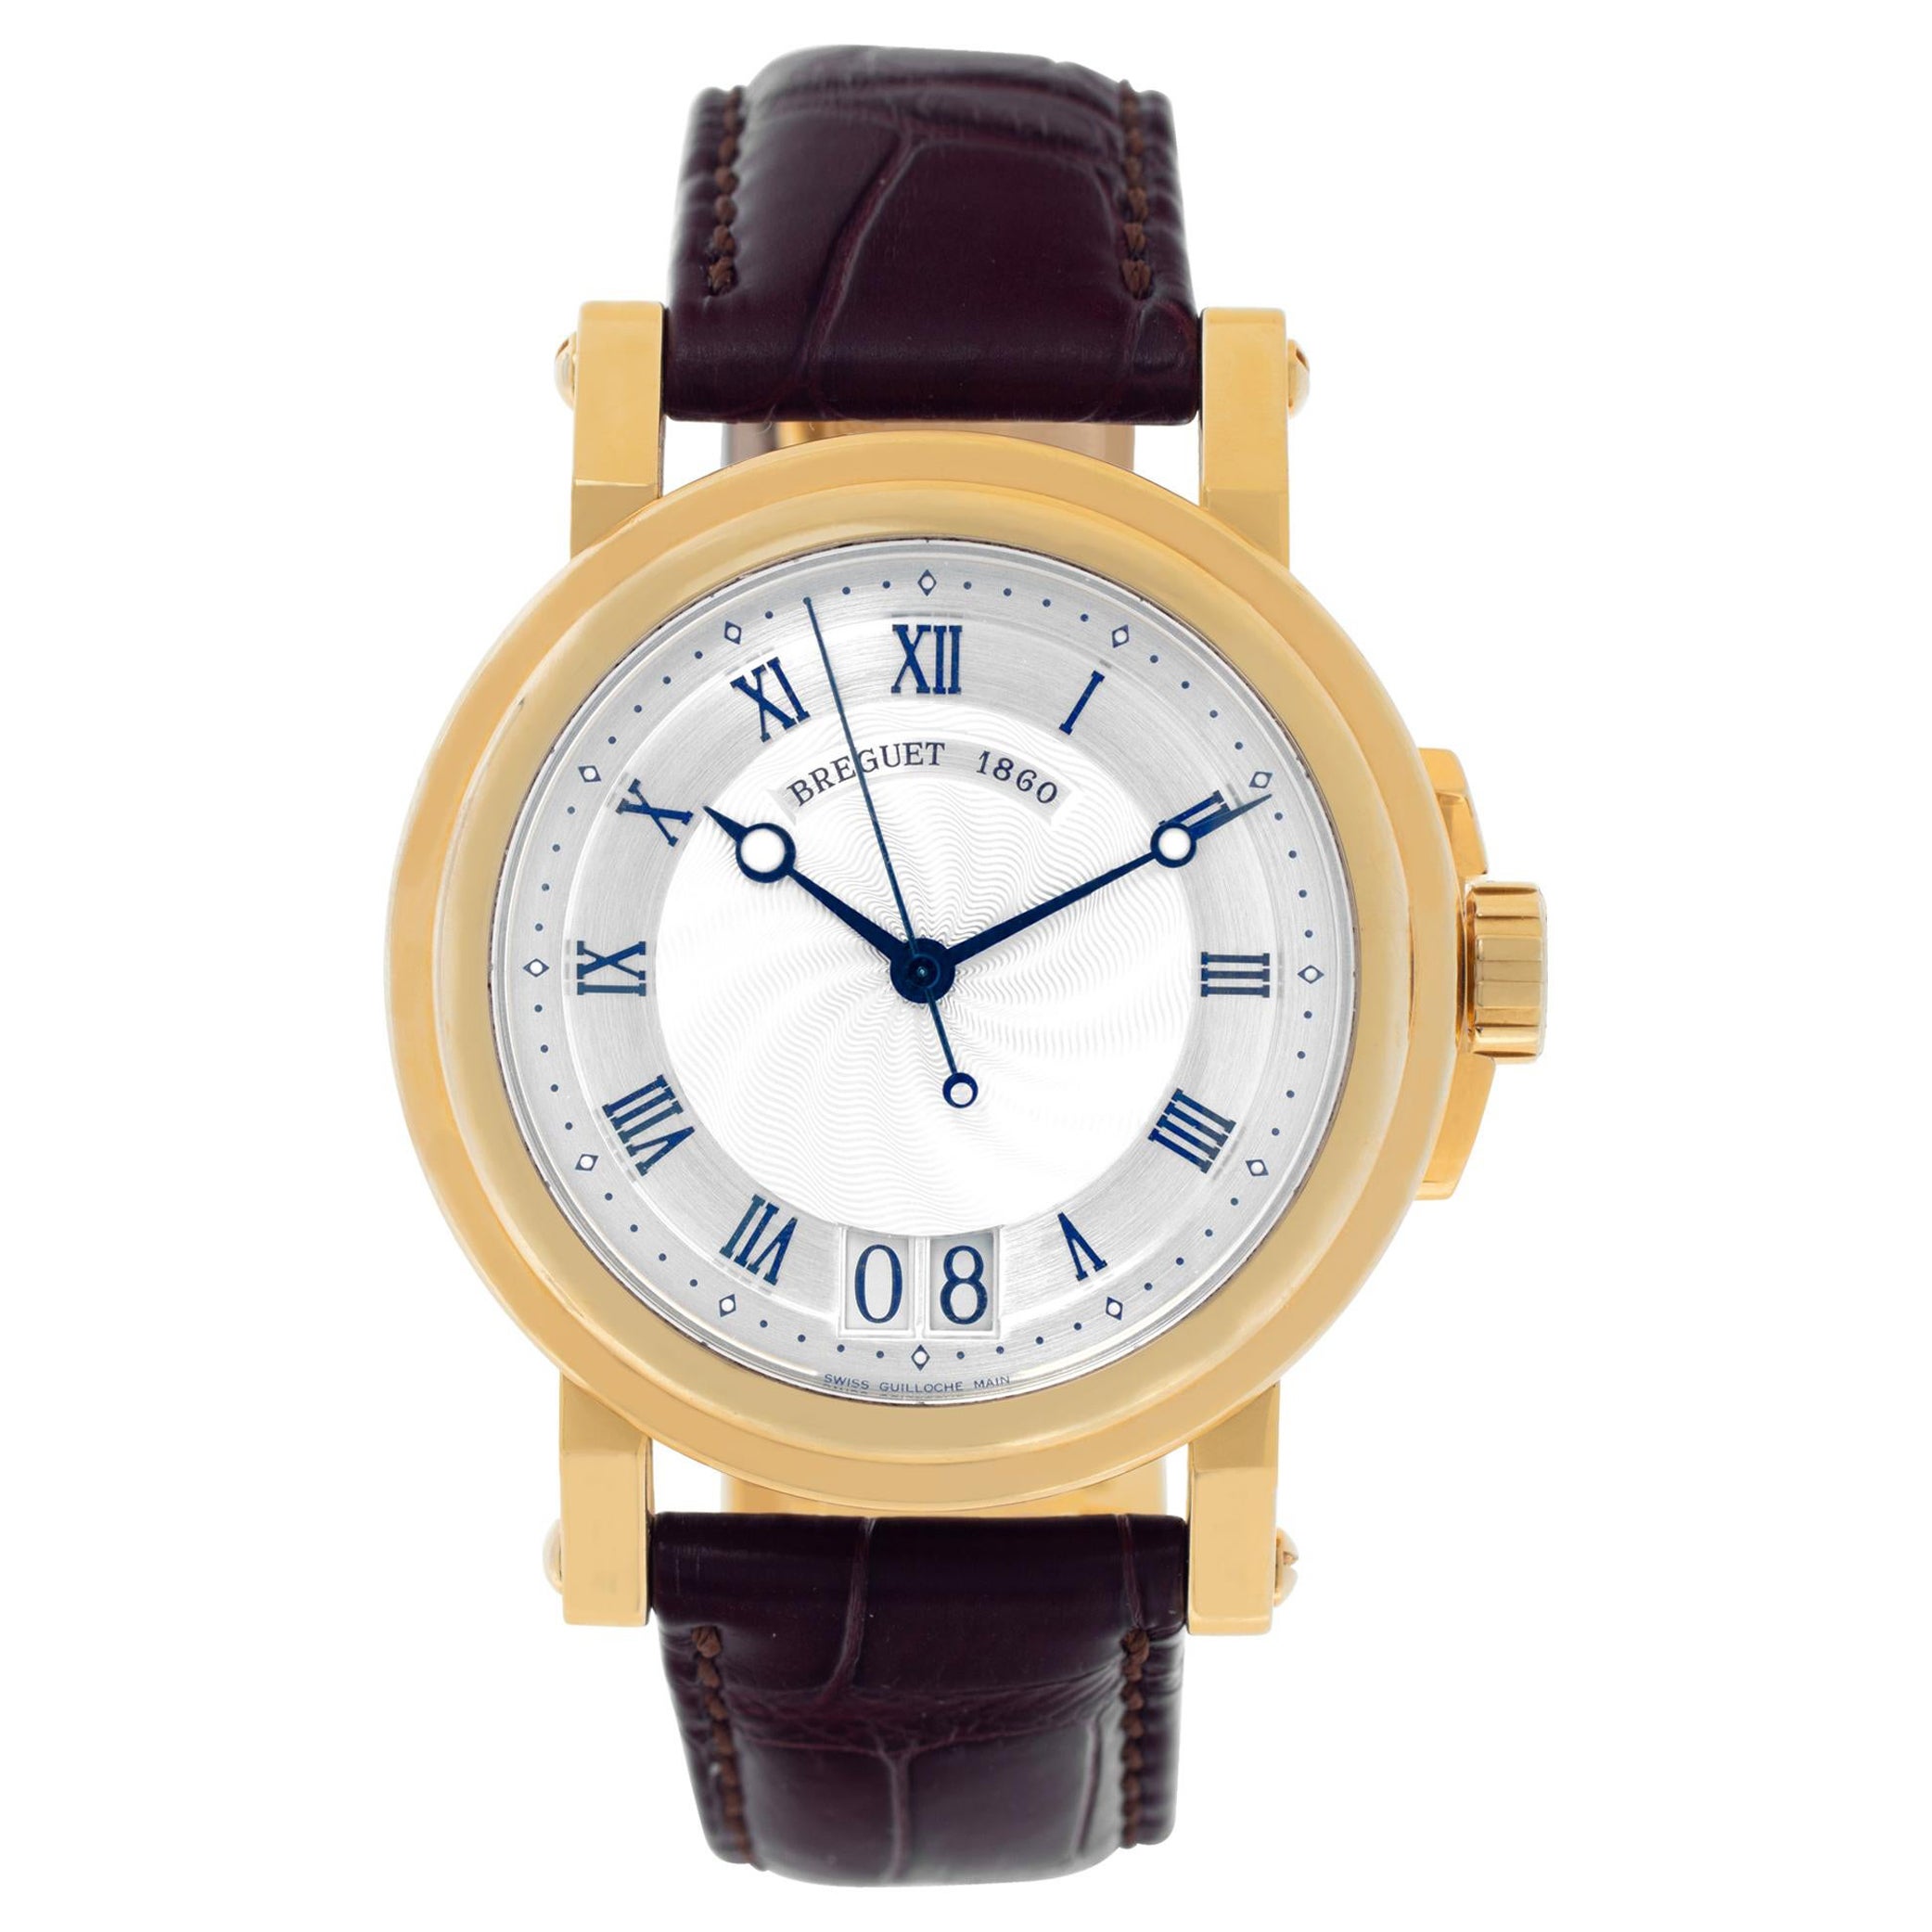 Breguet Marine Big Date 18k yellow gold Automatic Wristwatch Ref 5817BA